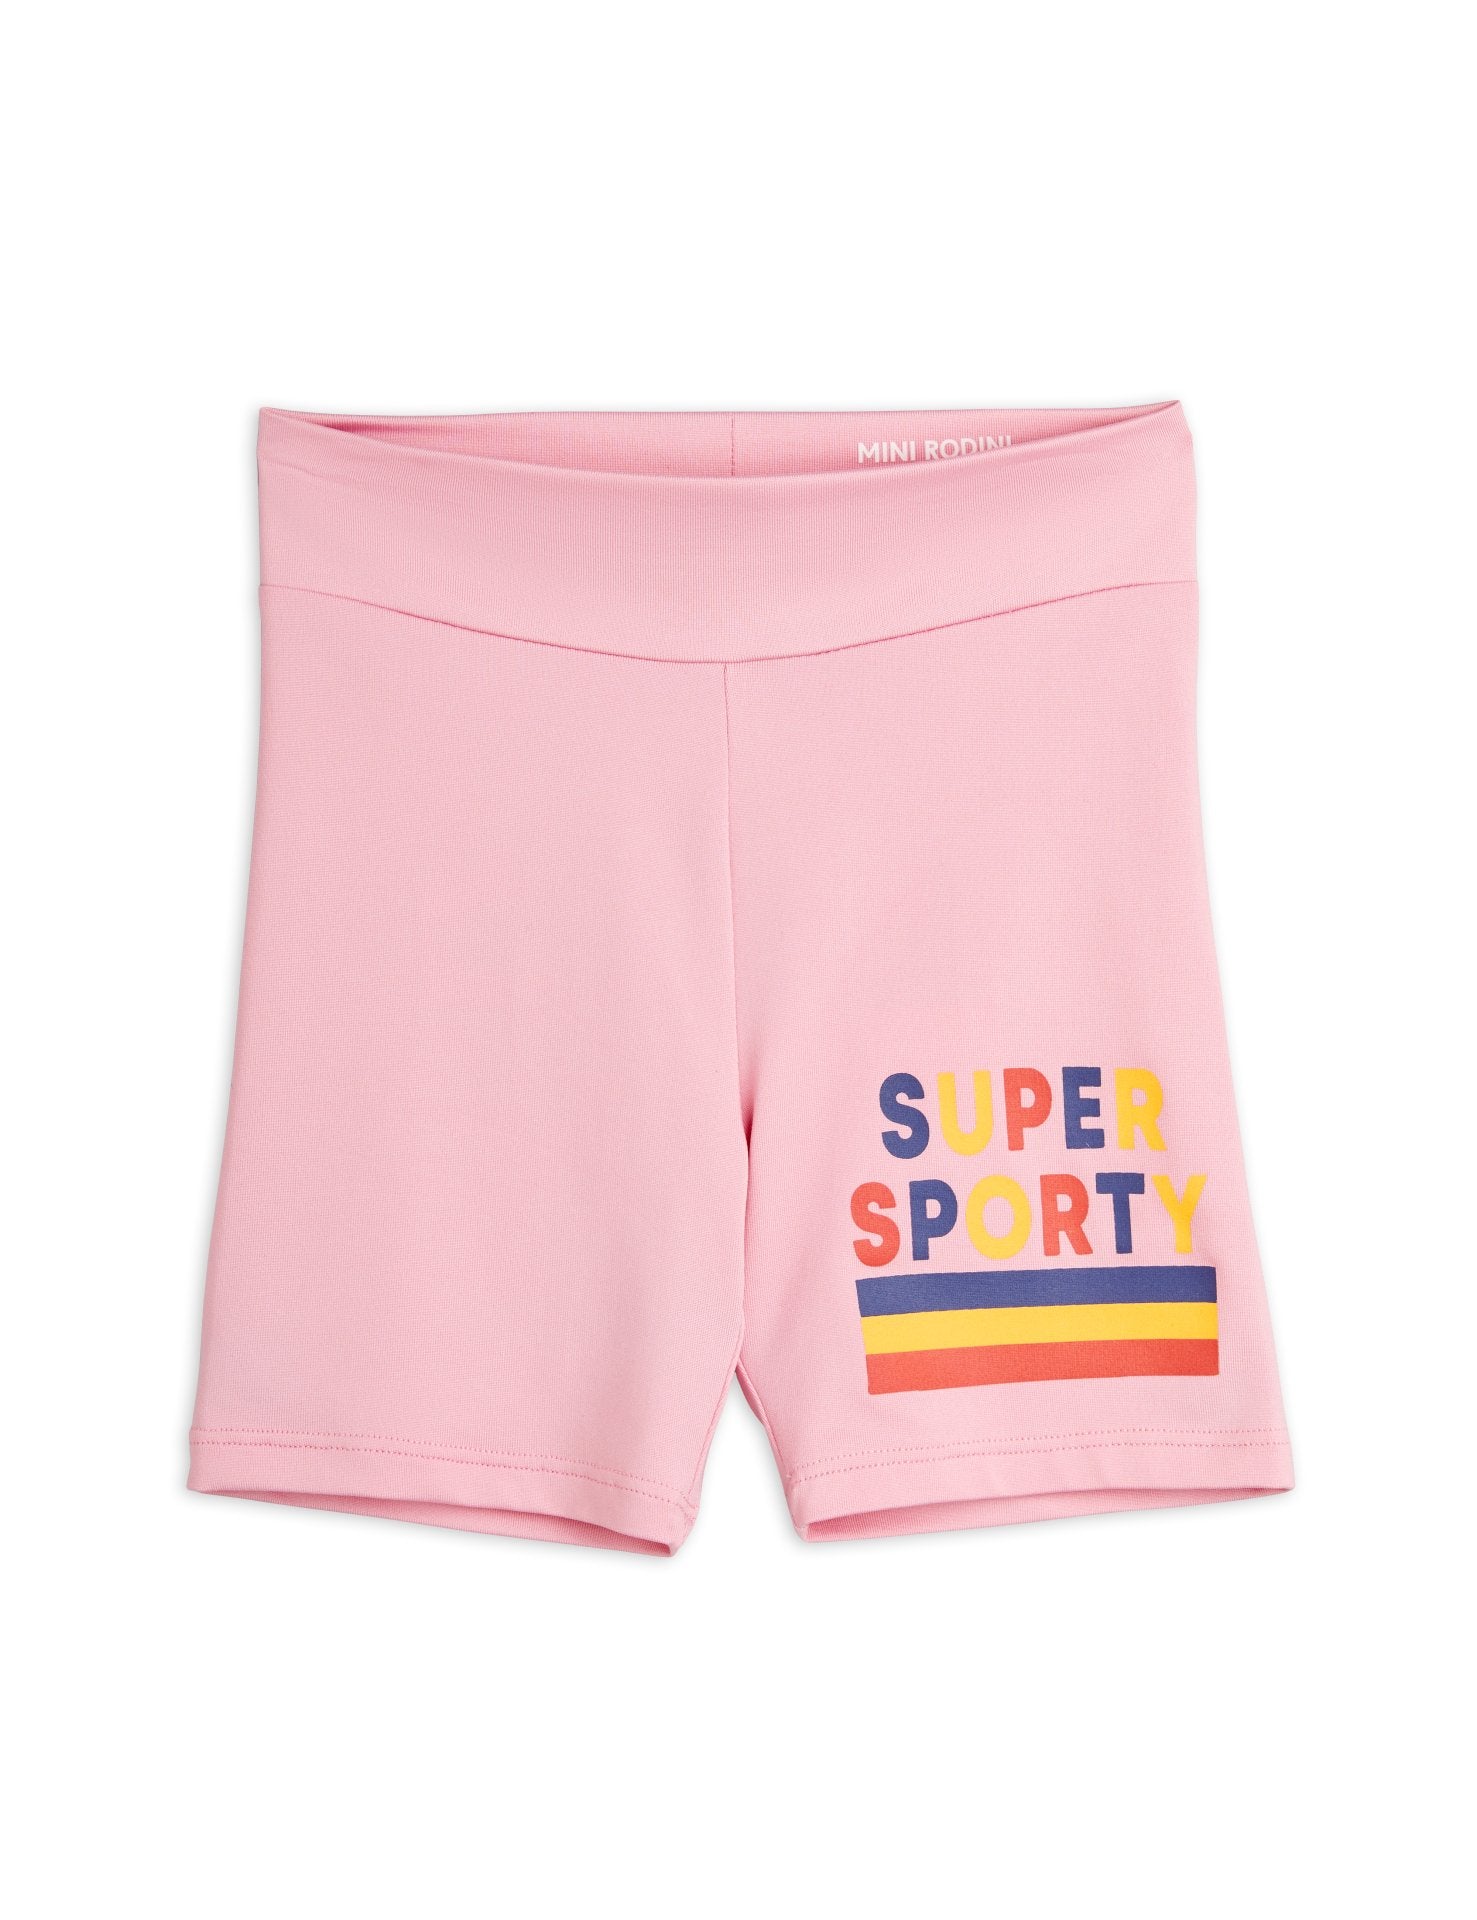 Super sporty sp bike shorts